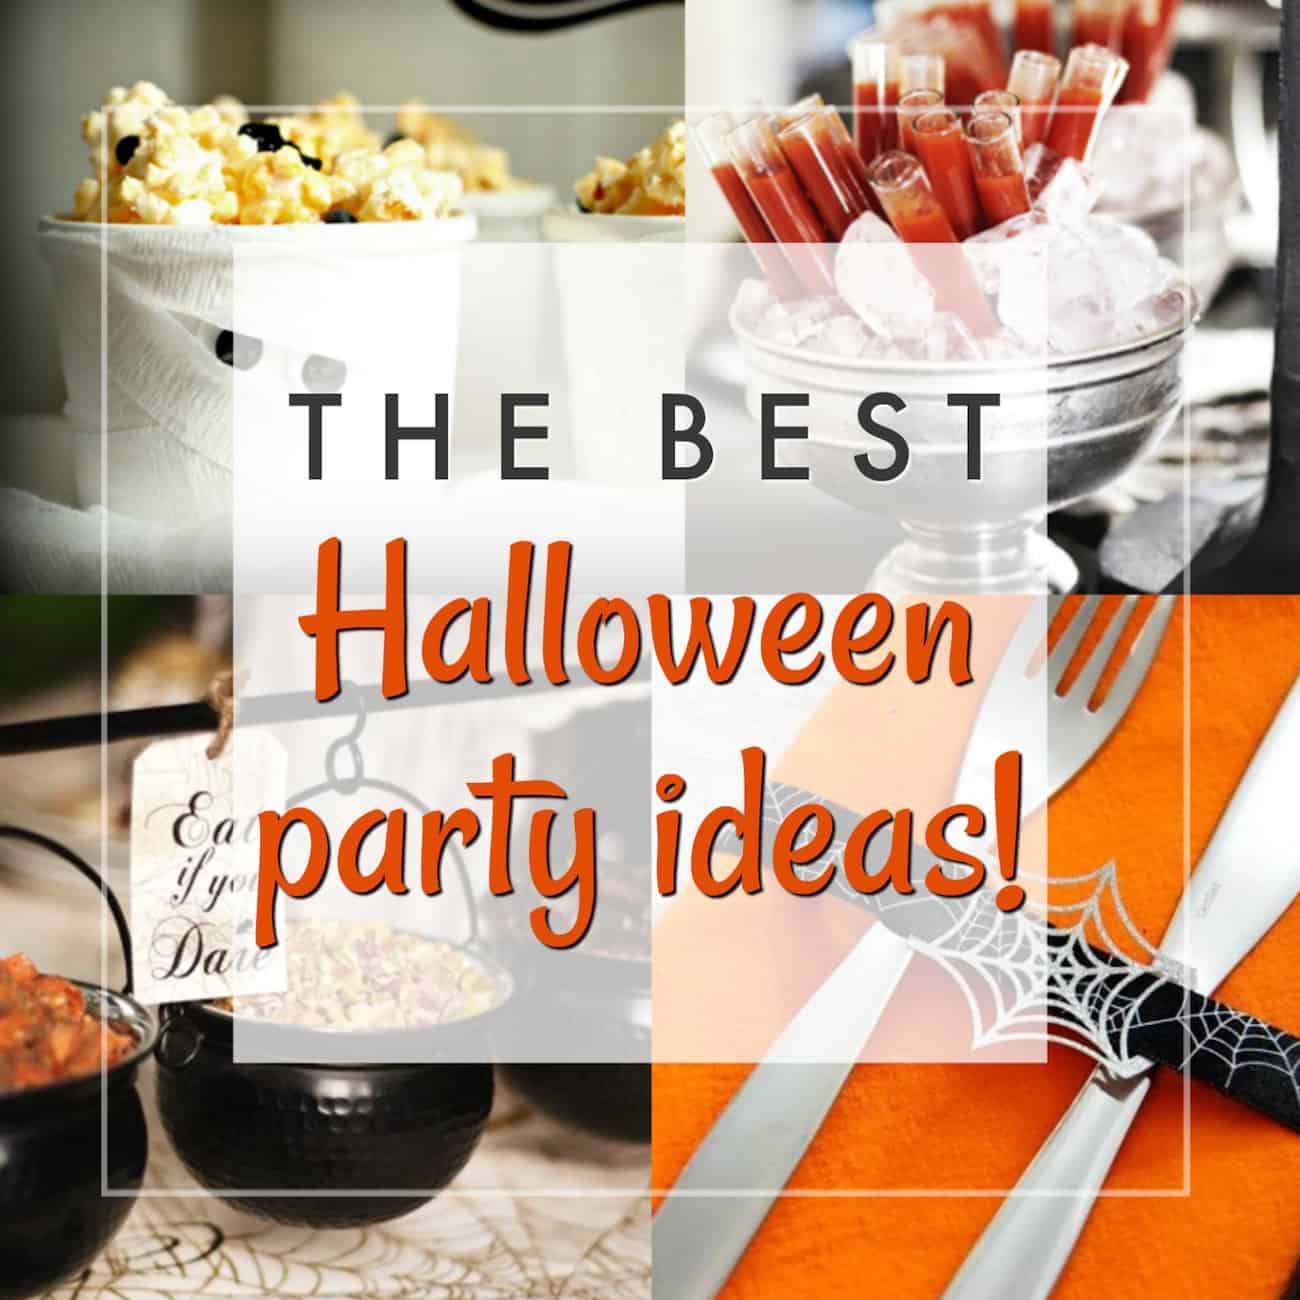 Halloween party ideas